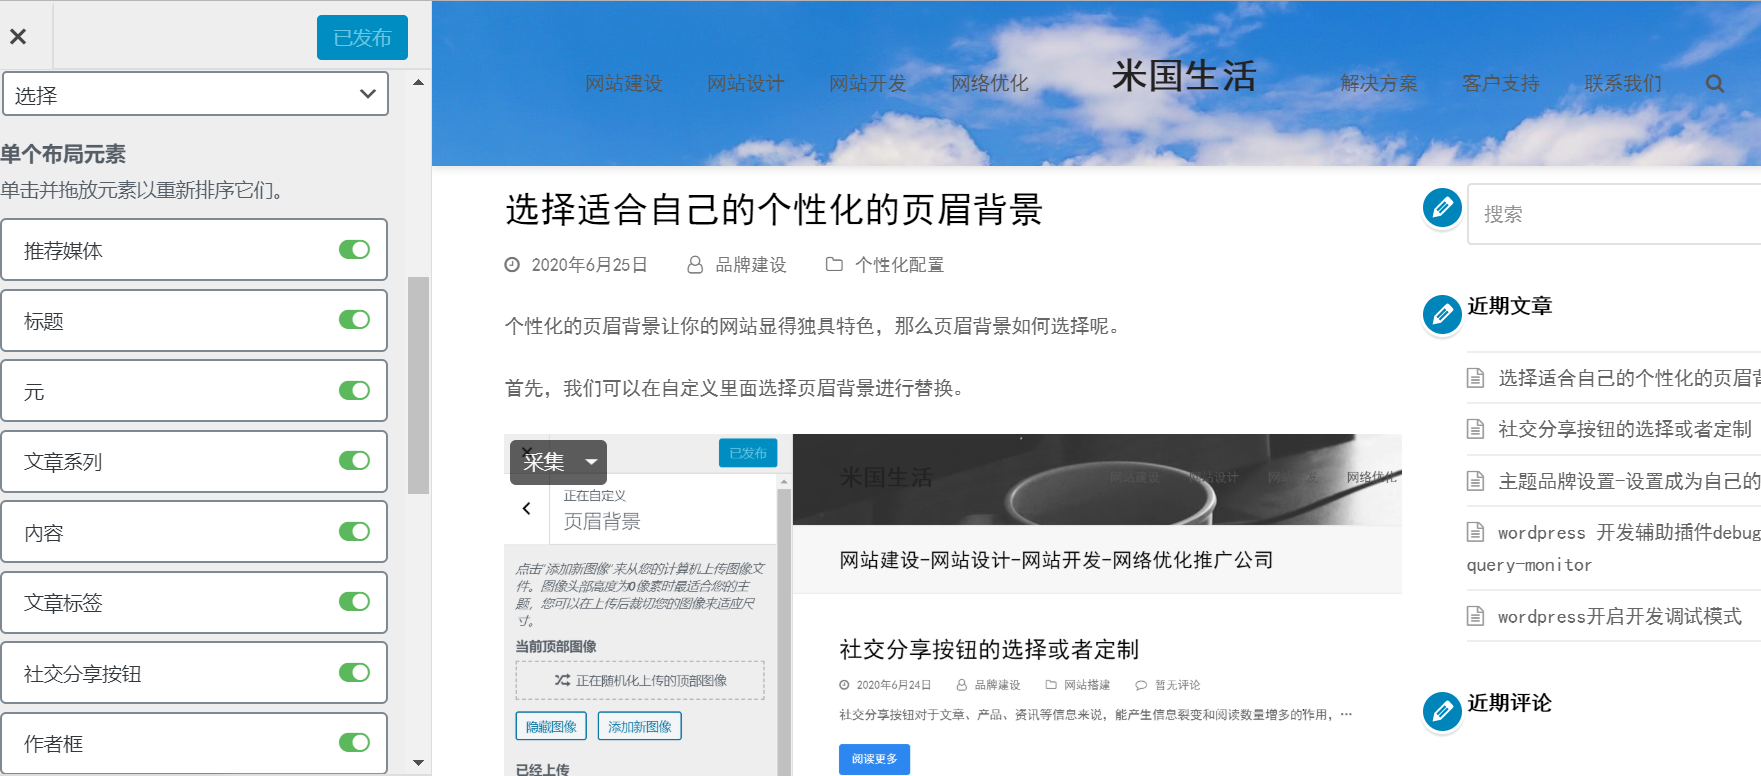 Website article layout customization-brand-SEO-public opinion-optimization-米国生活